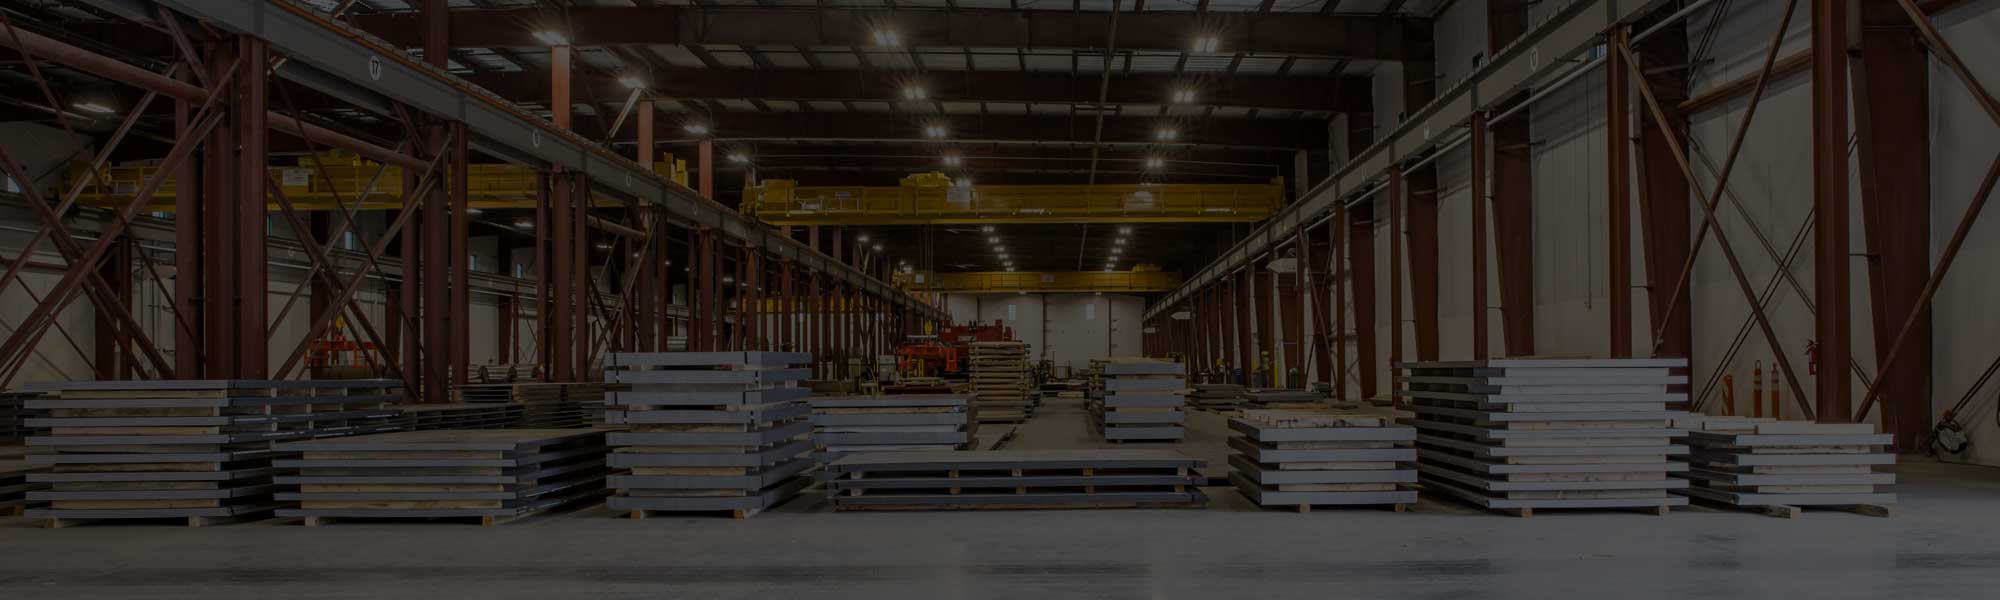 inside of a steel distribution warehouse